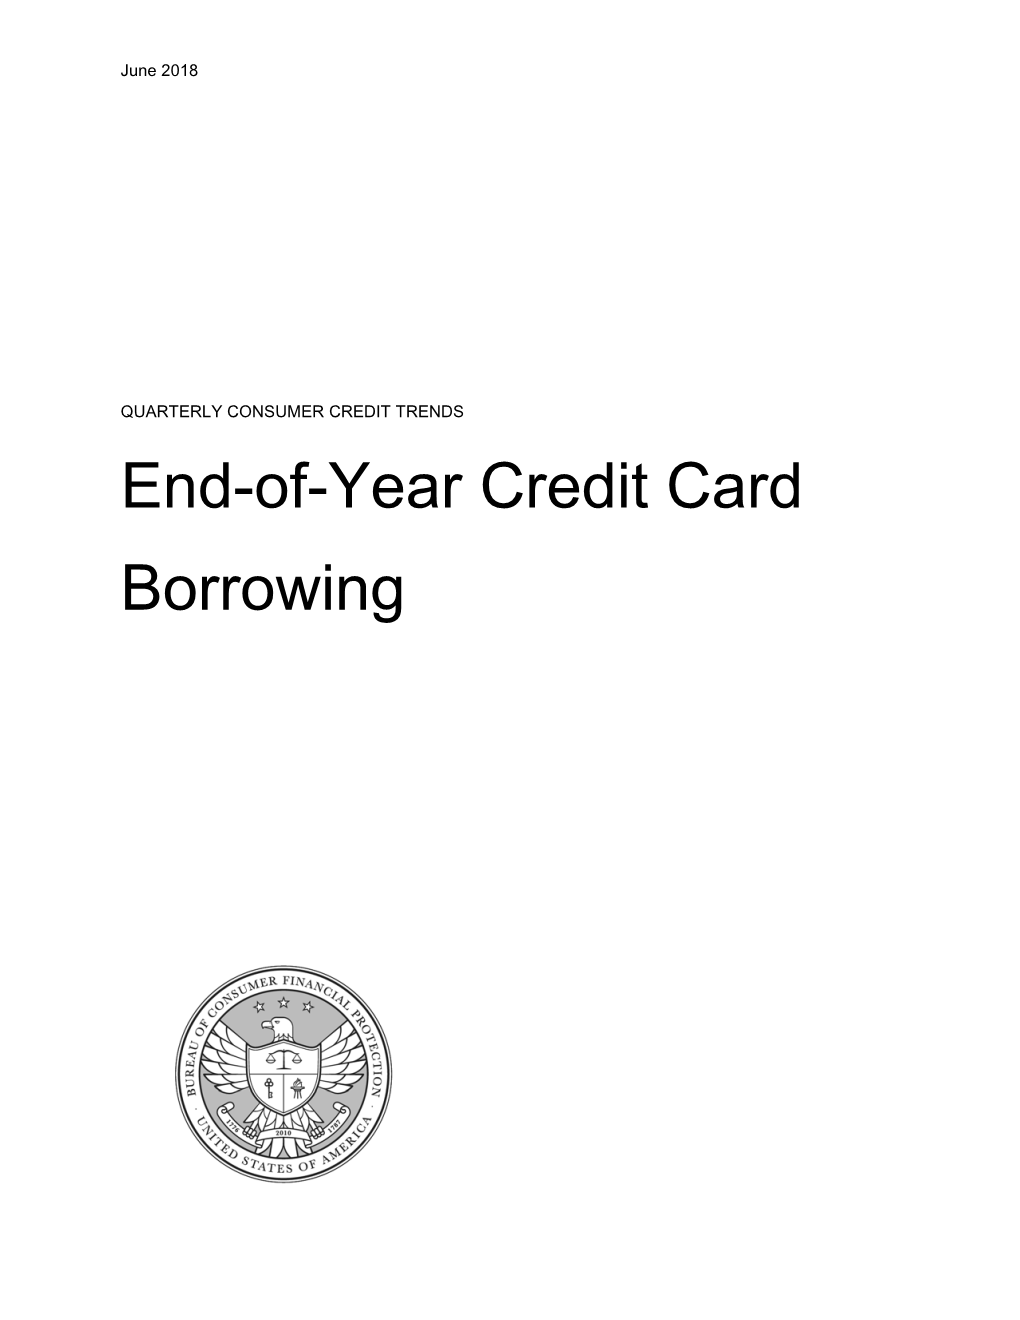 End-Of-Year Credit Card Borrowing